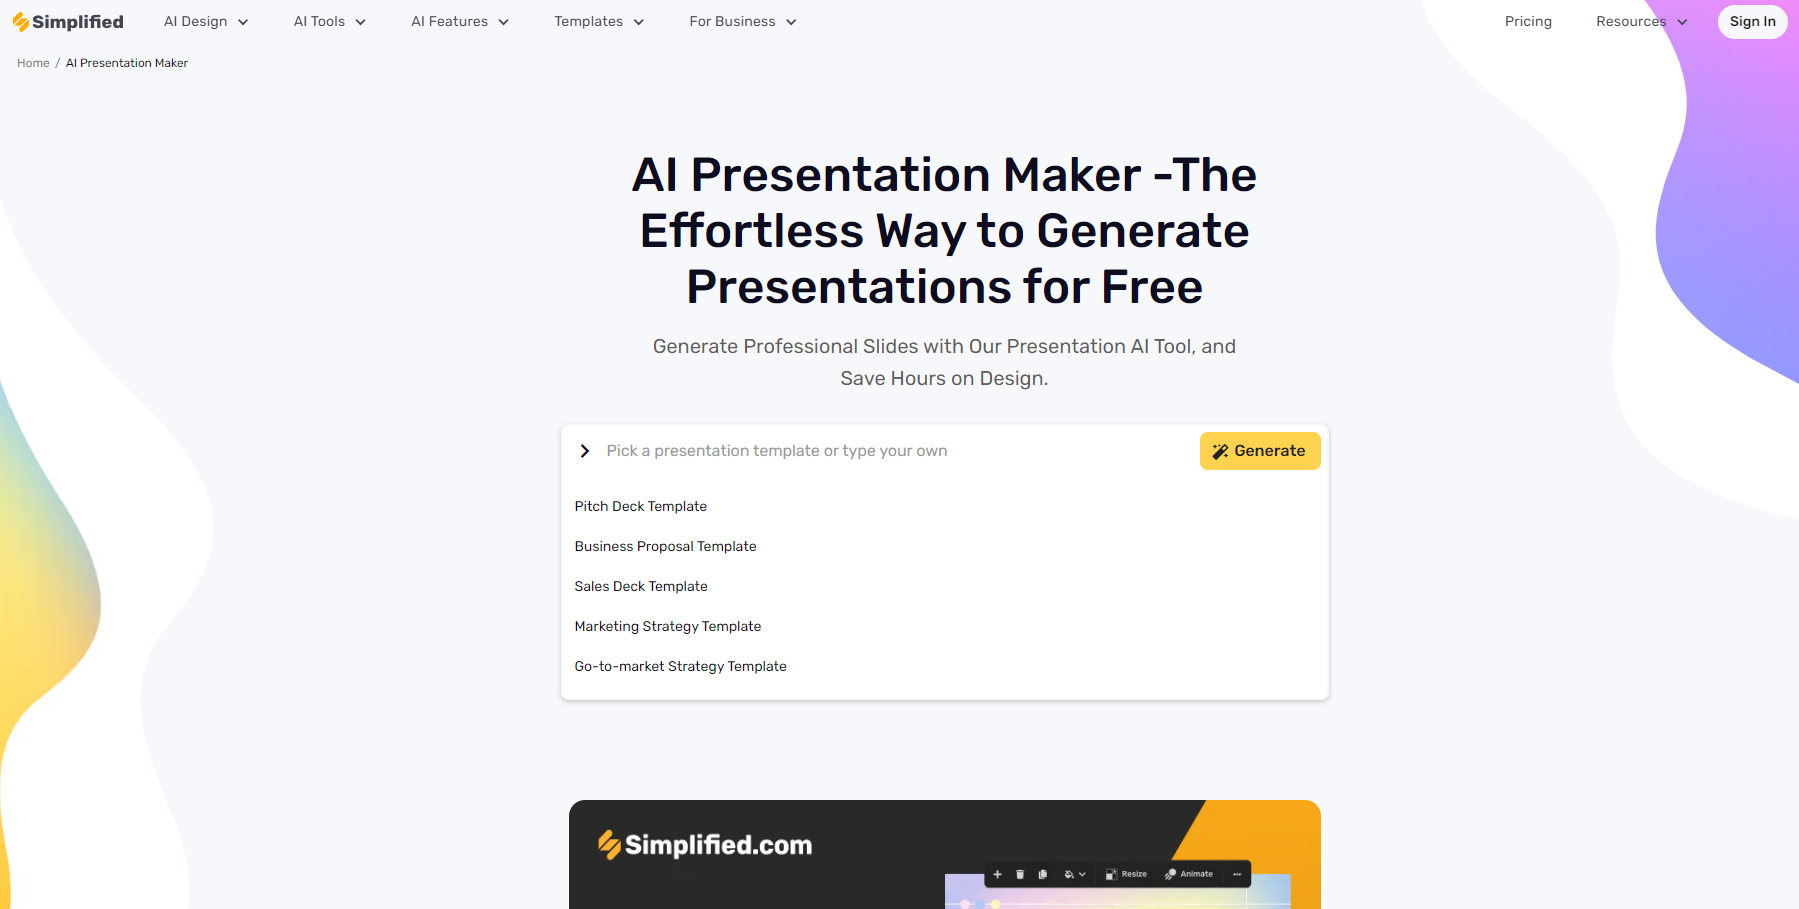 
Simplifies's AI Presentation Maker
